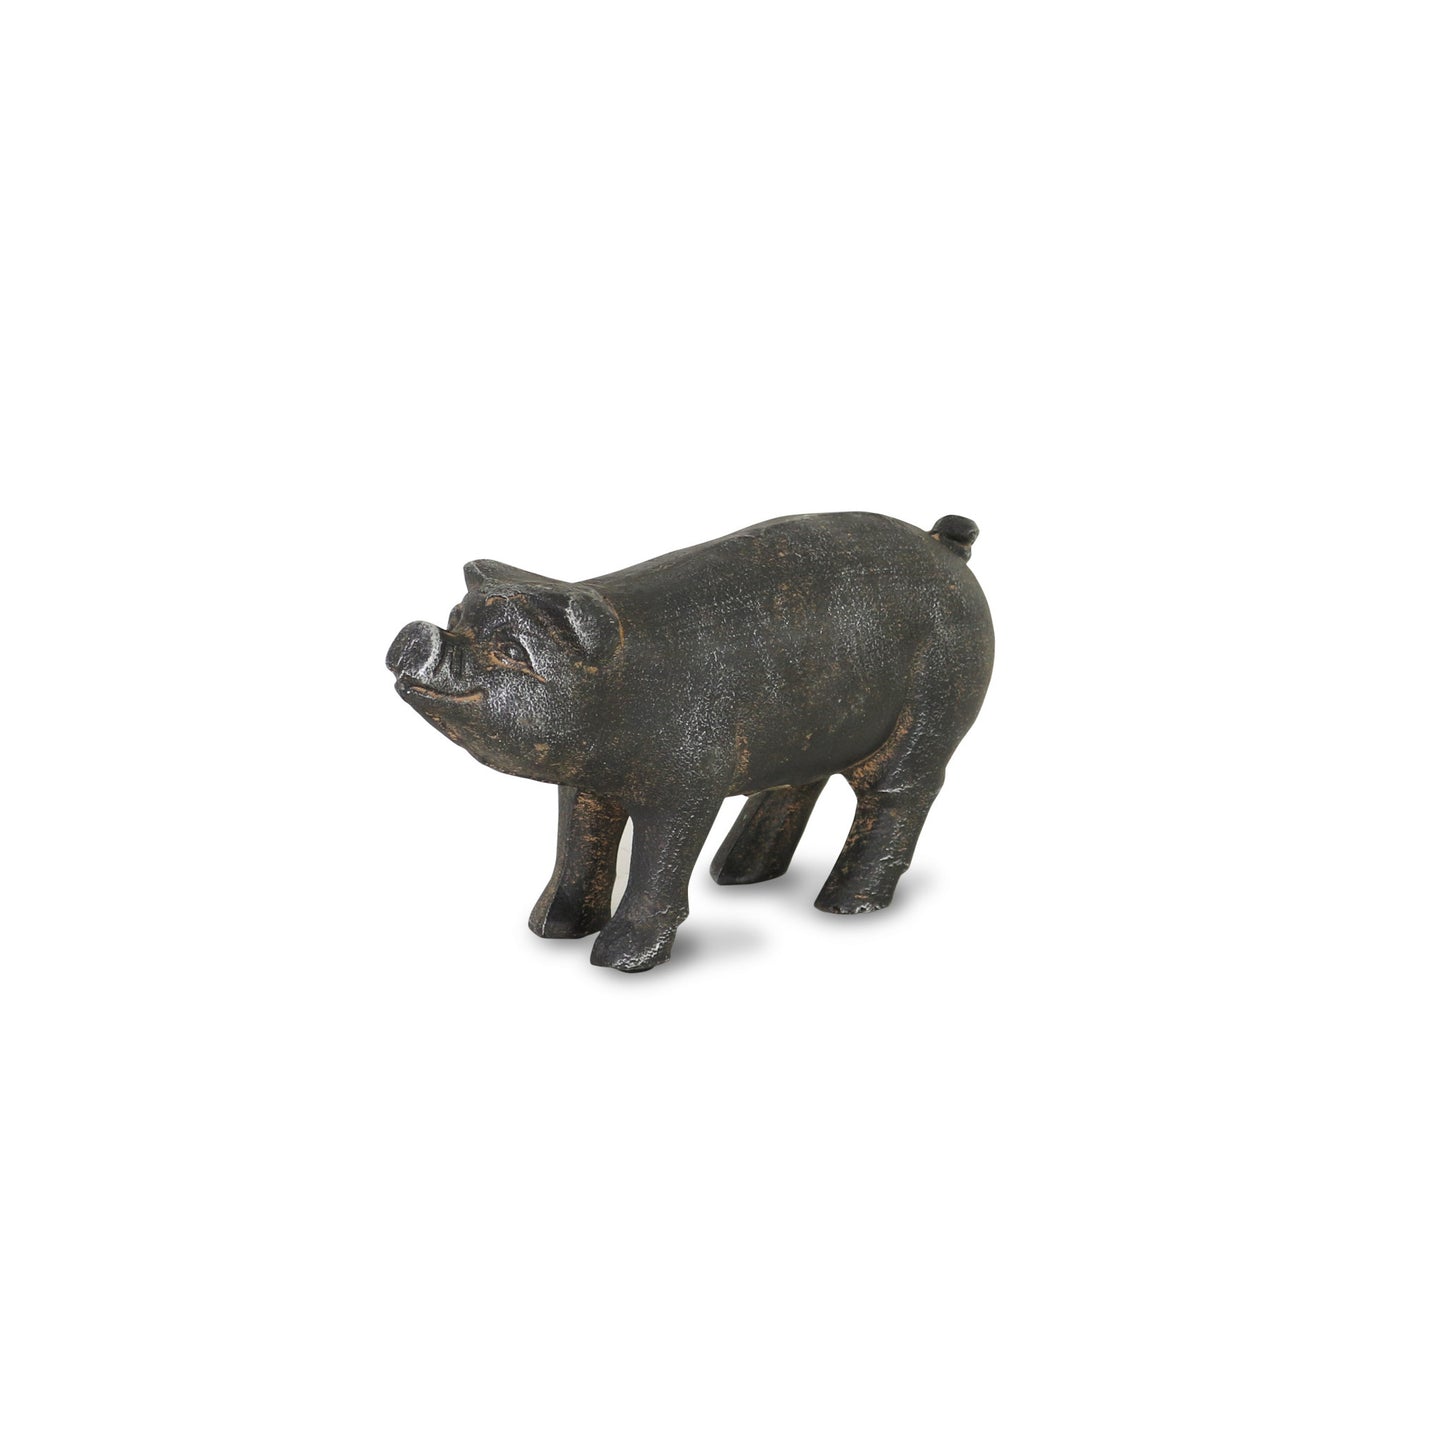 5" Black Cast Iron Pig Hand Painted Sculpture